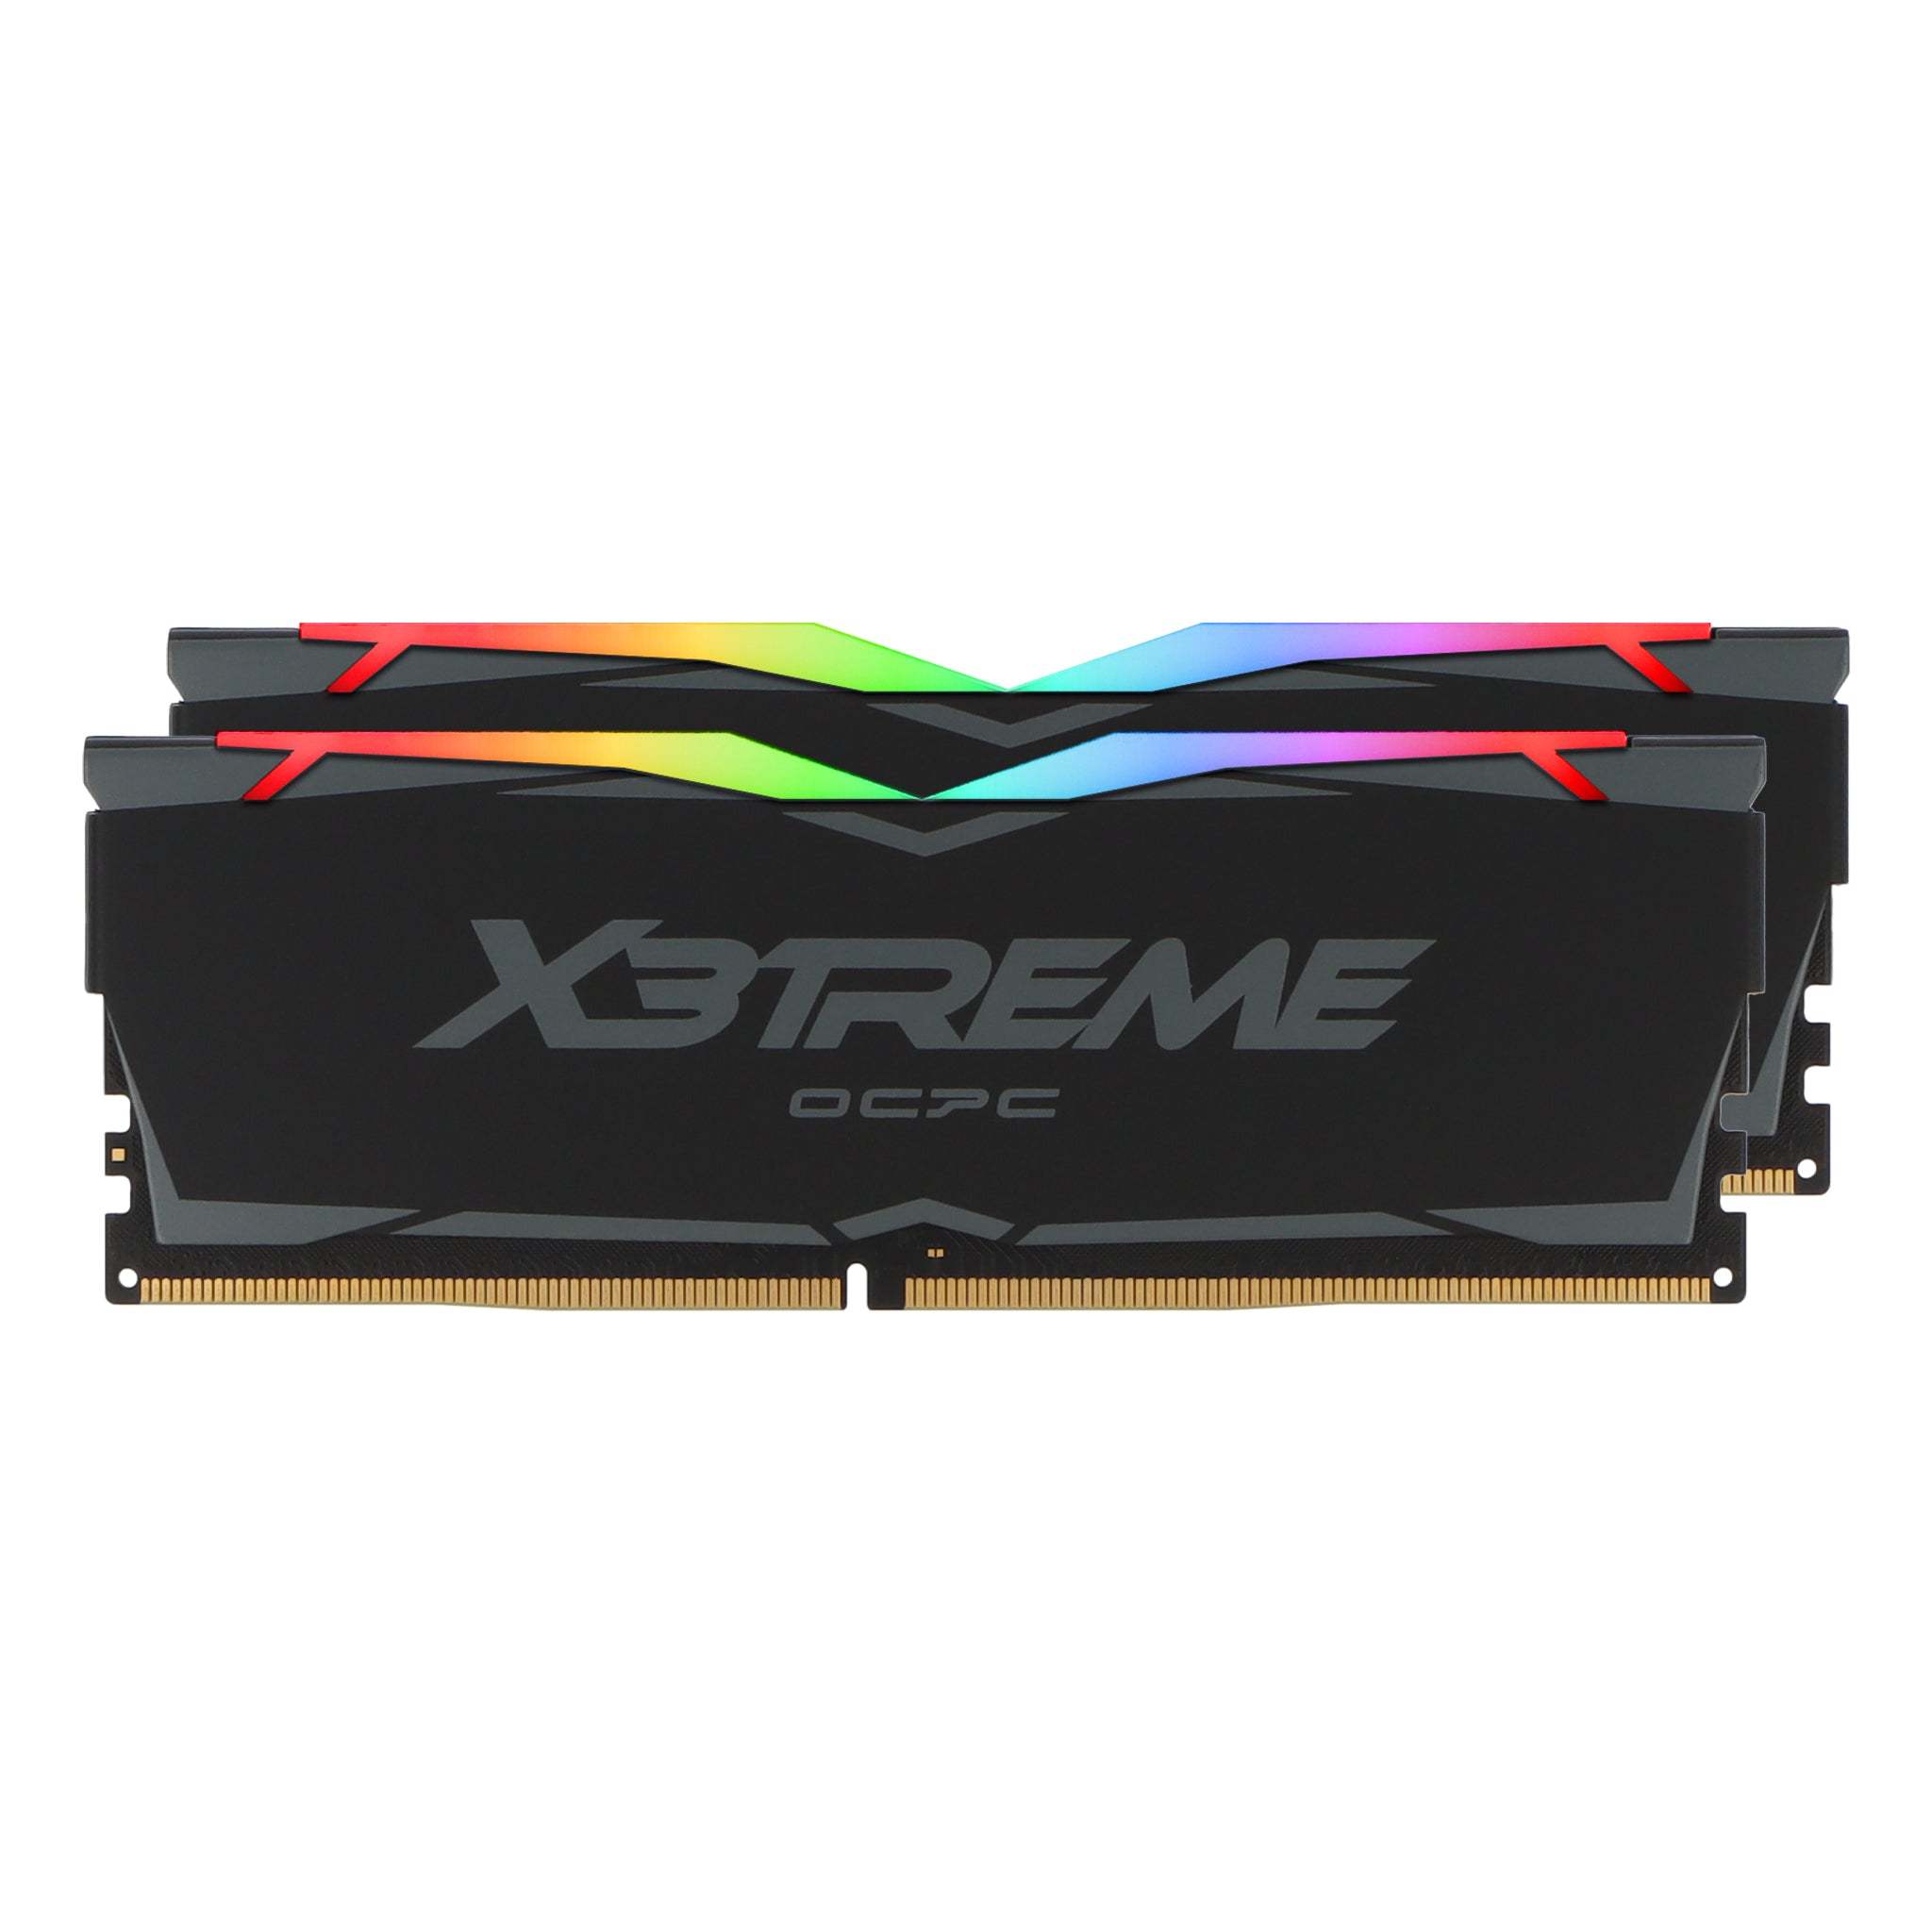 OCPC X3Treme Aura RGB DDR4 16GB (2x8GB) - 3600MHz - CL17 - DIMM- Desktop - Black